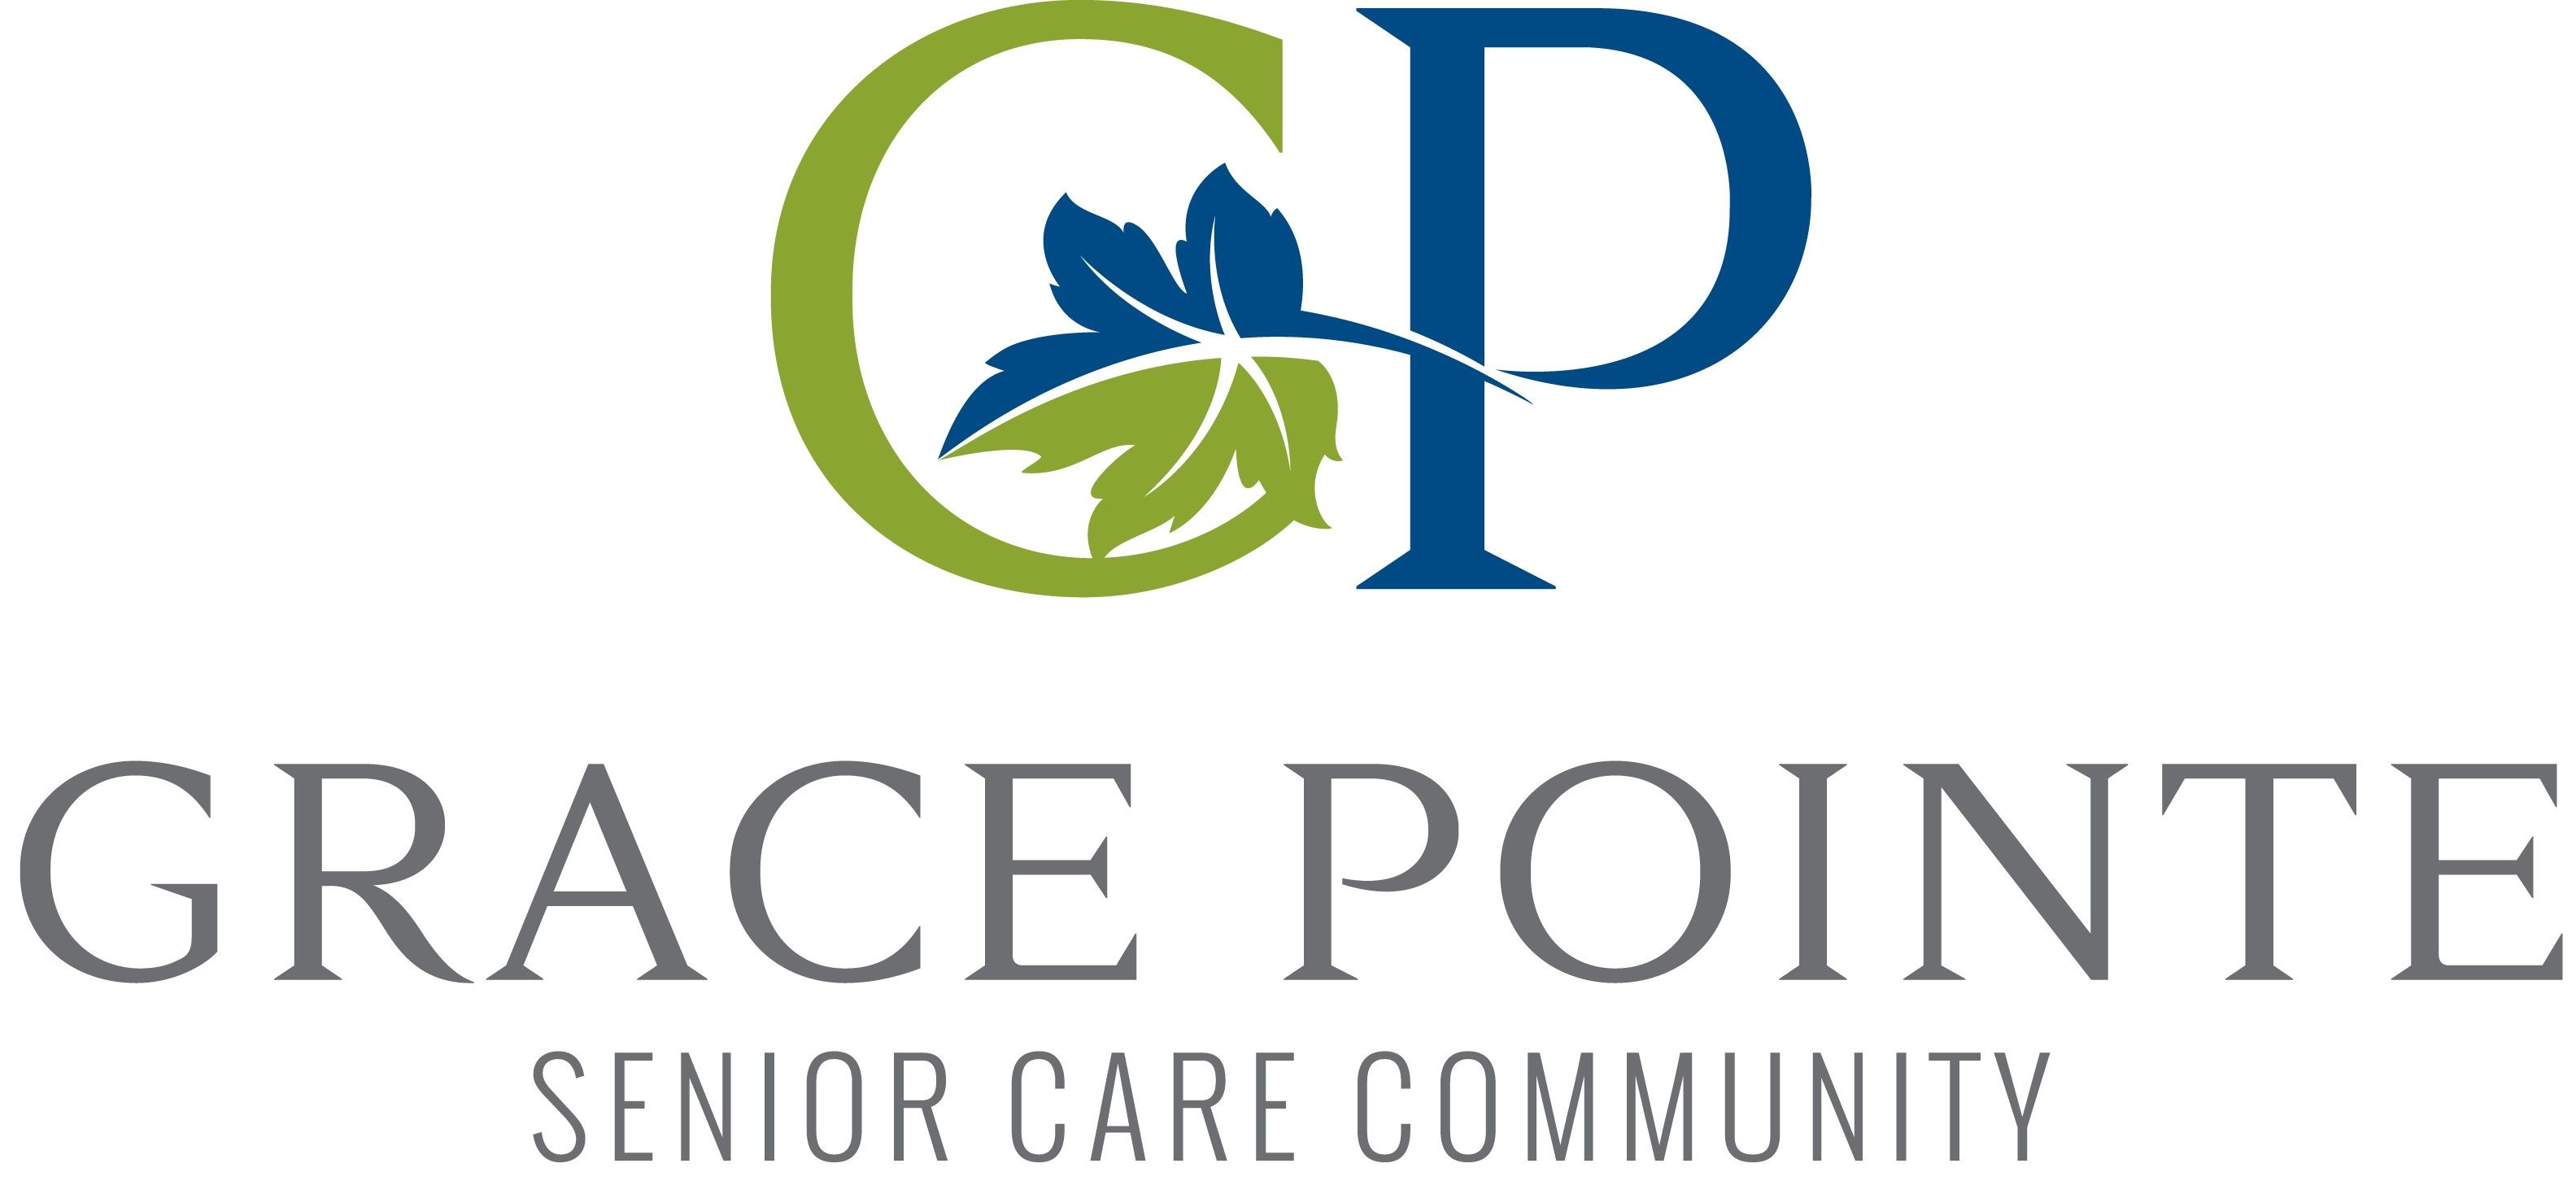 Grace Pointe Senior Care Community 4